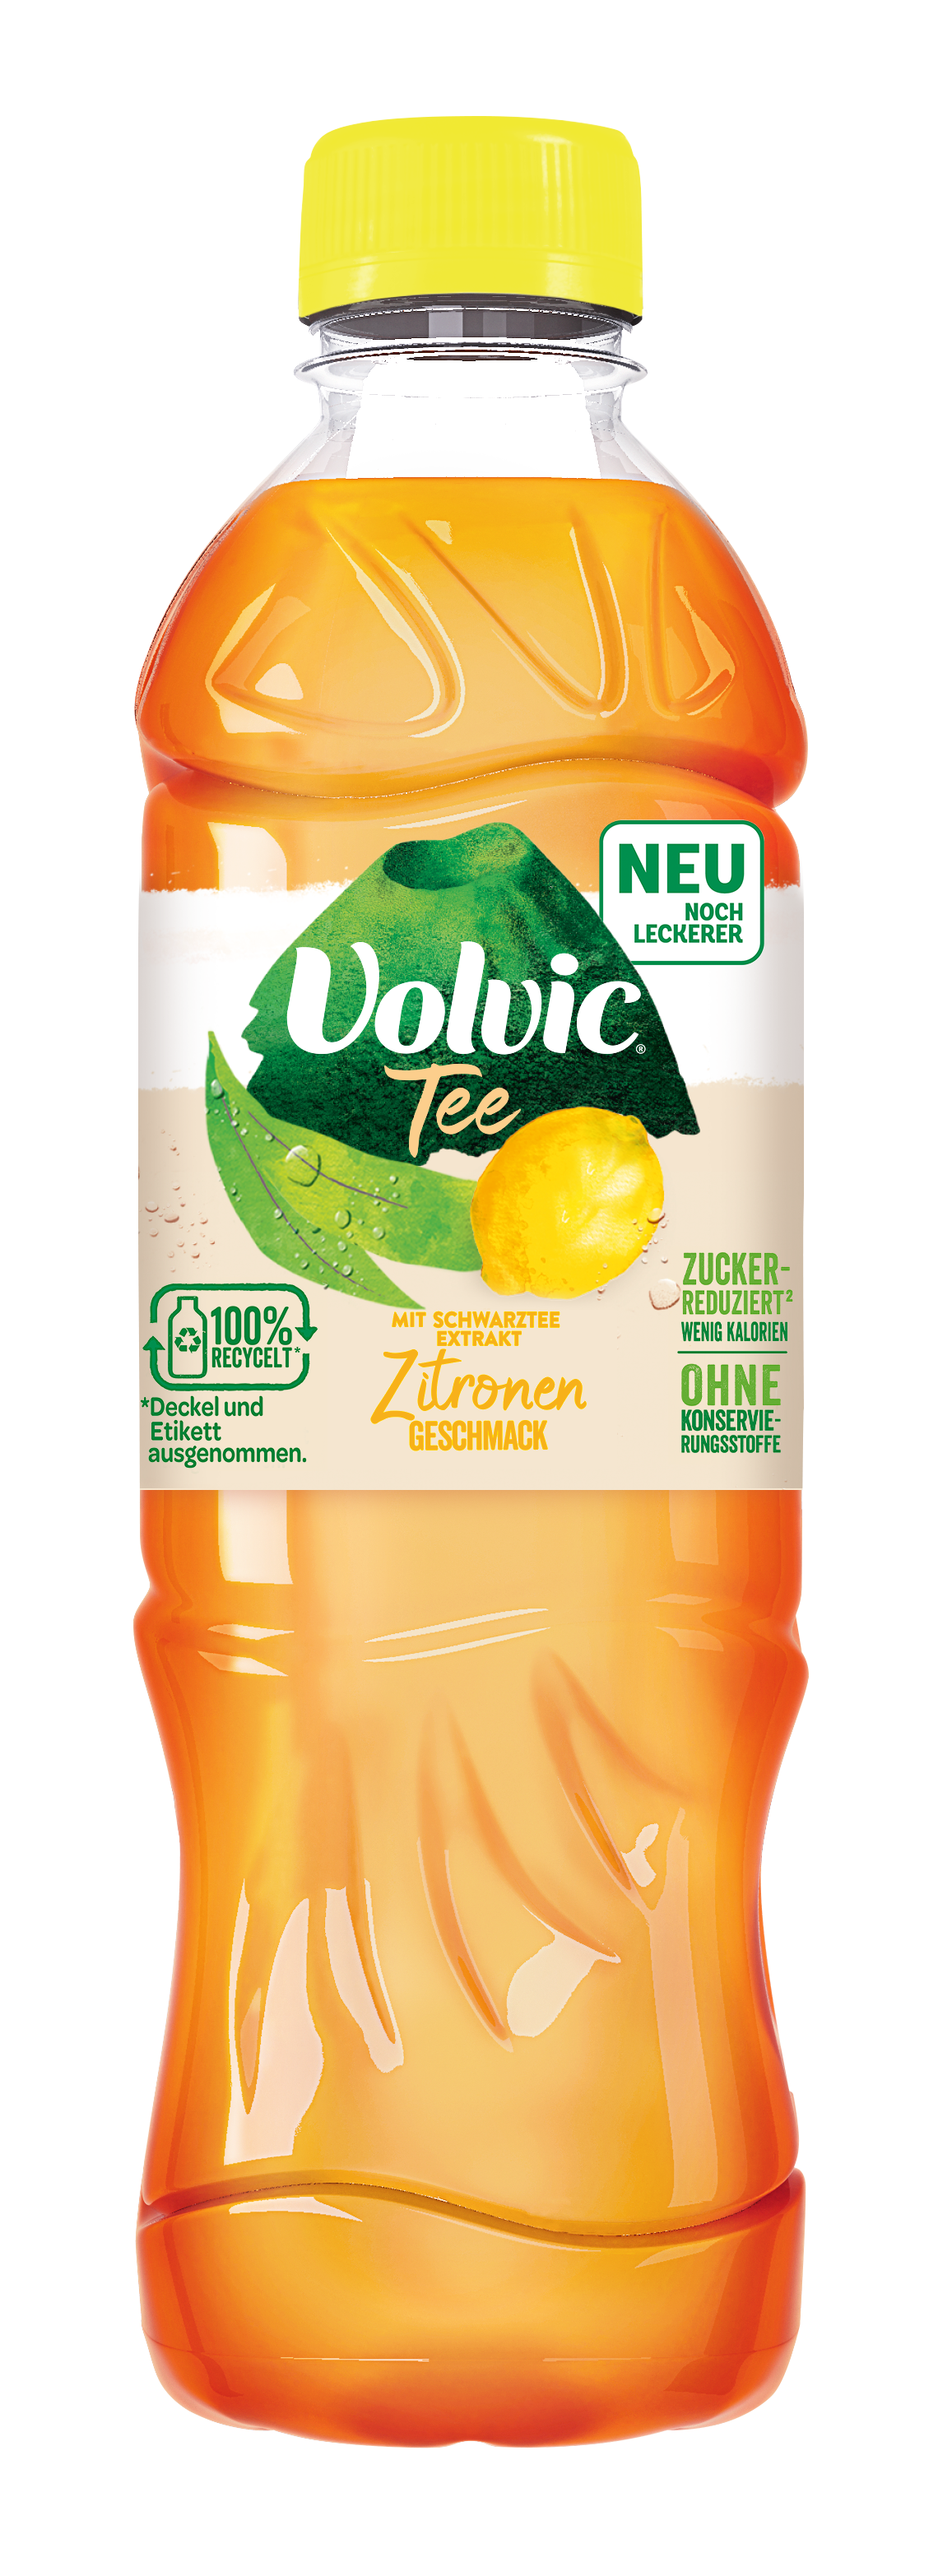 Volvic Tee Zitrone 75cL new recipe